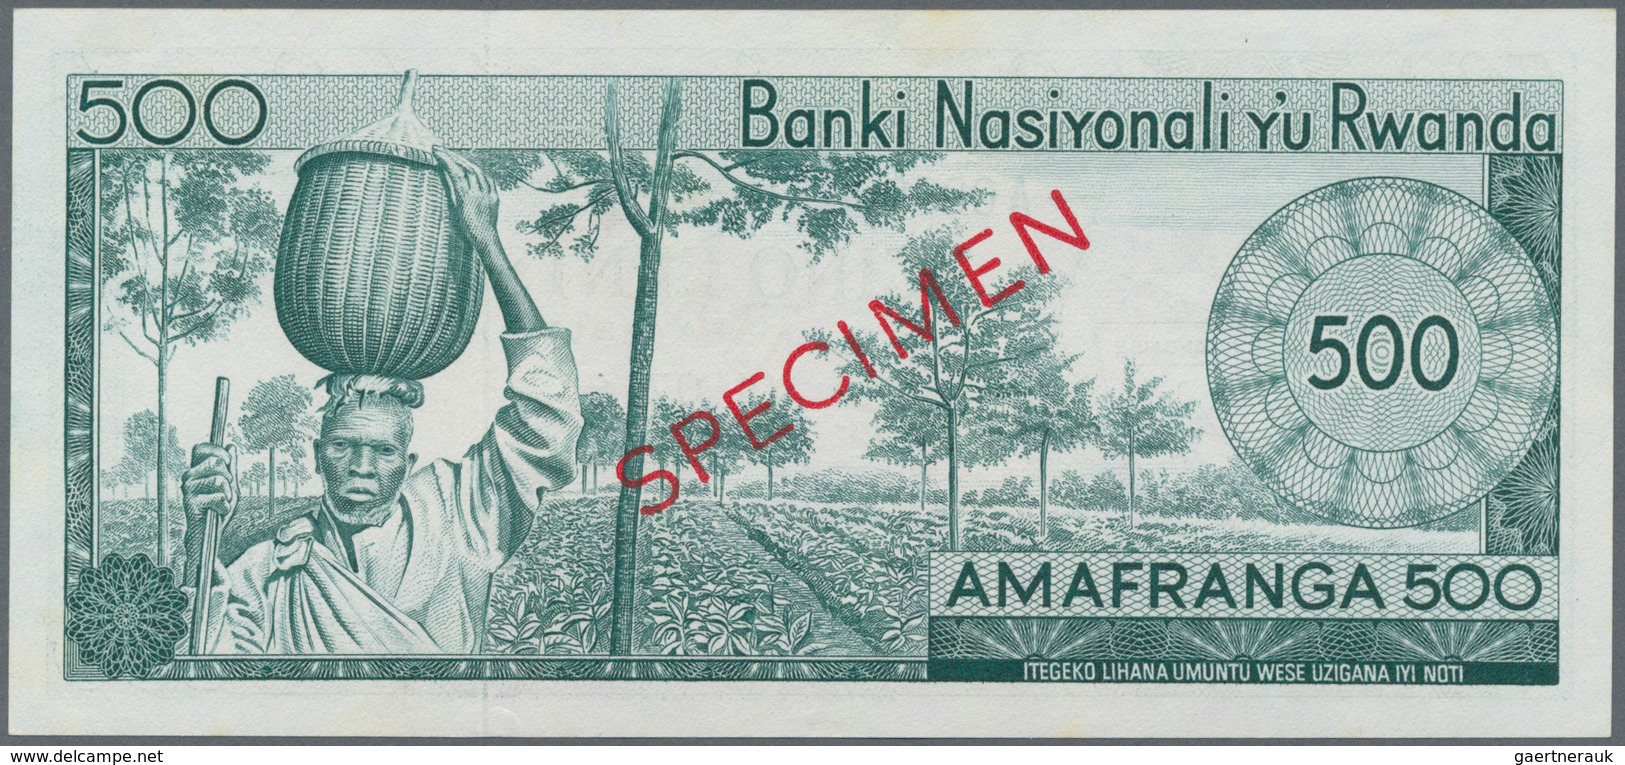 Rwanda / Ruanda: Banque Nationale Du Rwanda 500 Francs 1964 SPECIMEN, P.9s In Perfect UNC Condition. - Ruanda